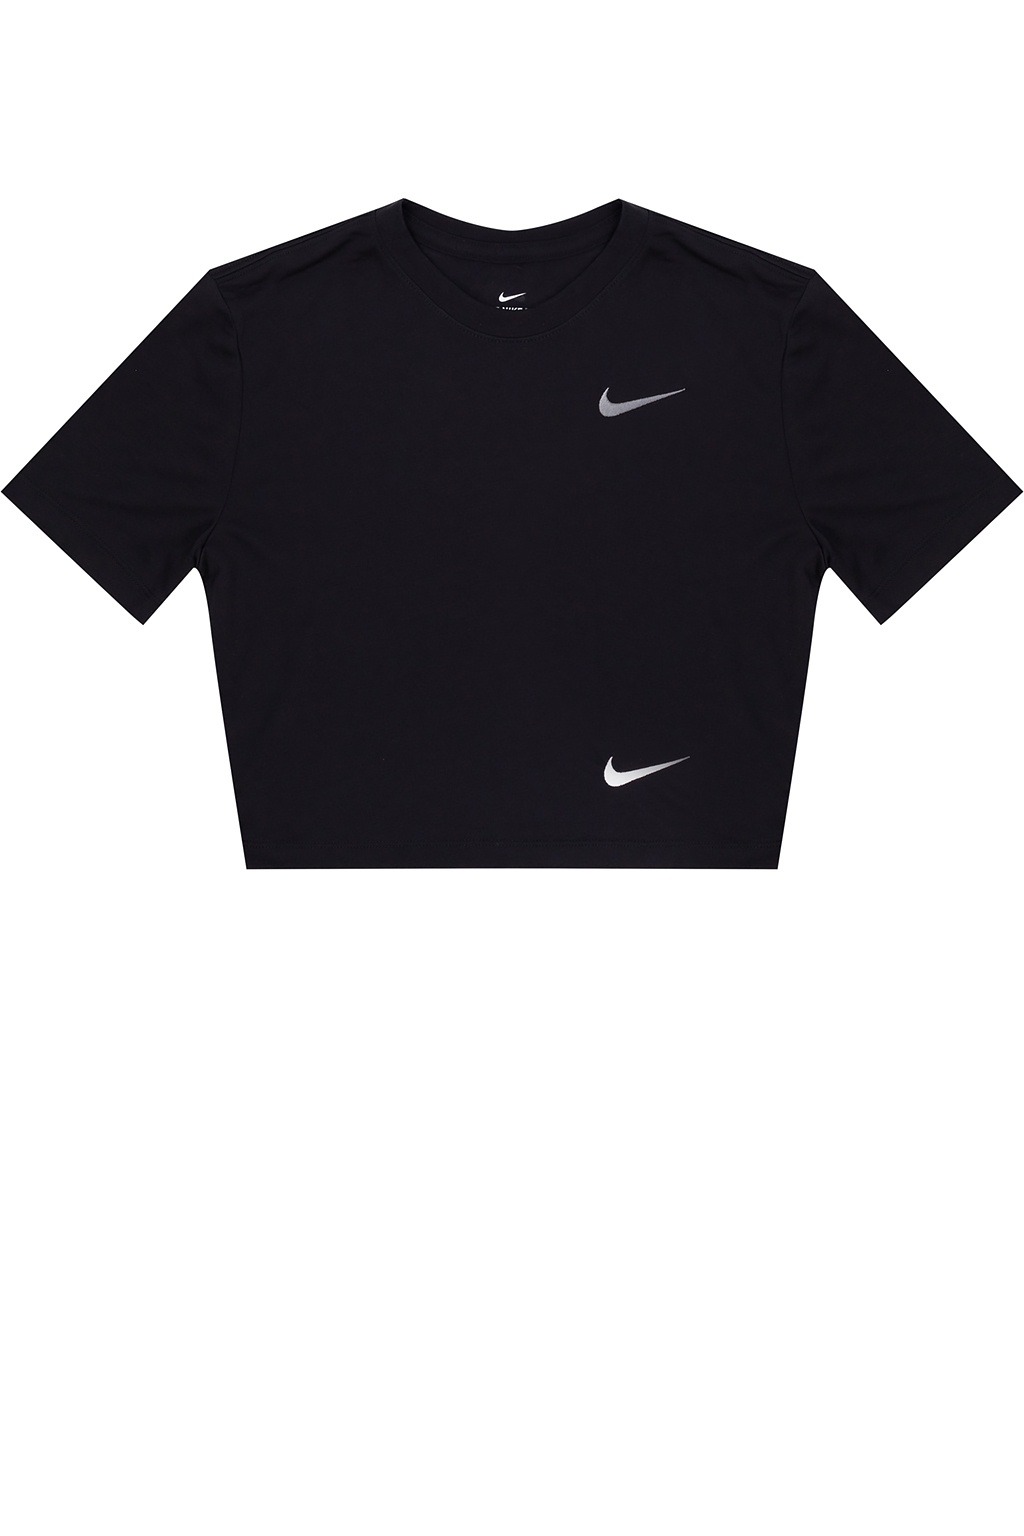 Cropped T-shirt with logo Nike - Vitkac Australia